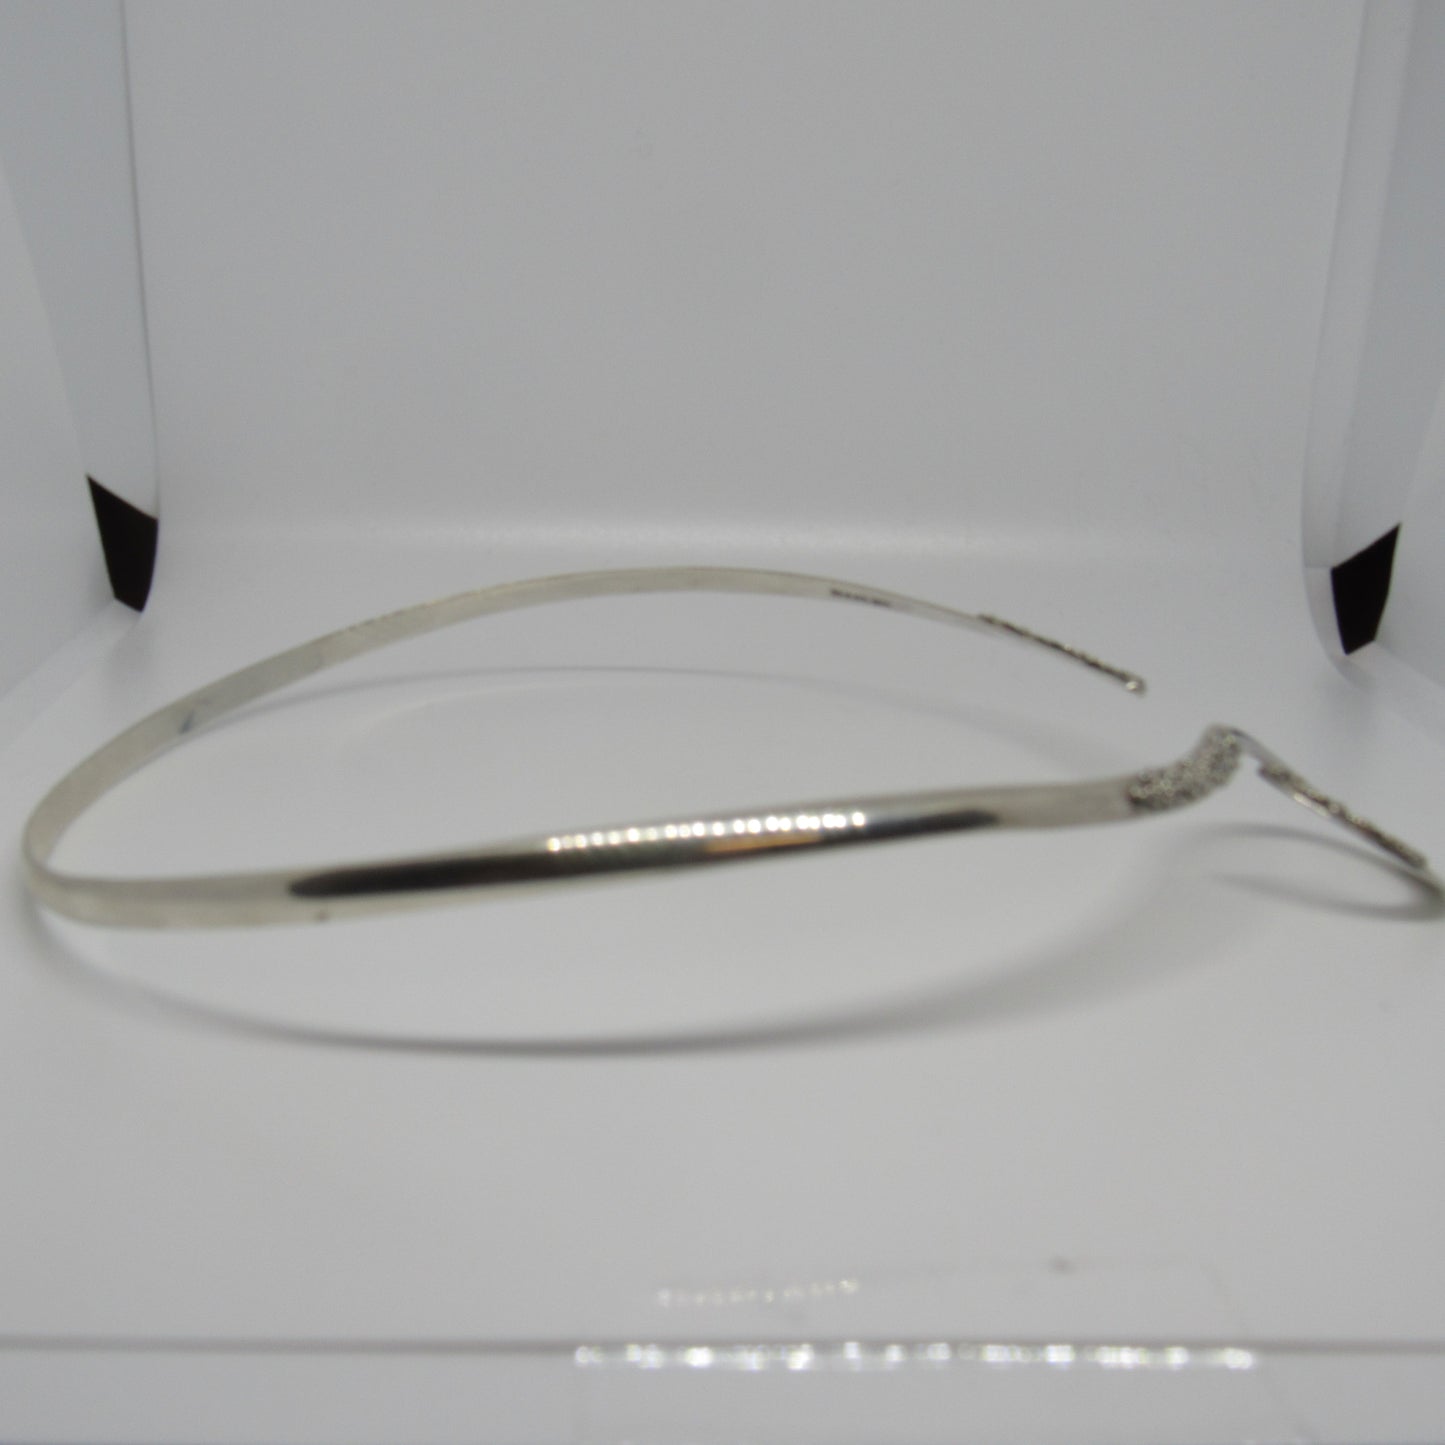 Sarda Sterling Silver Bali Pebbled Swirl Collar Choker S Hook Necklace - 17 inch